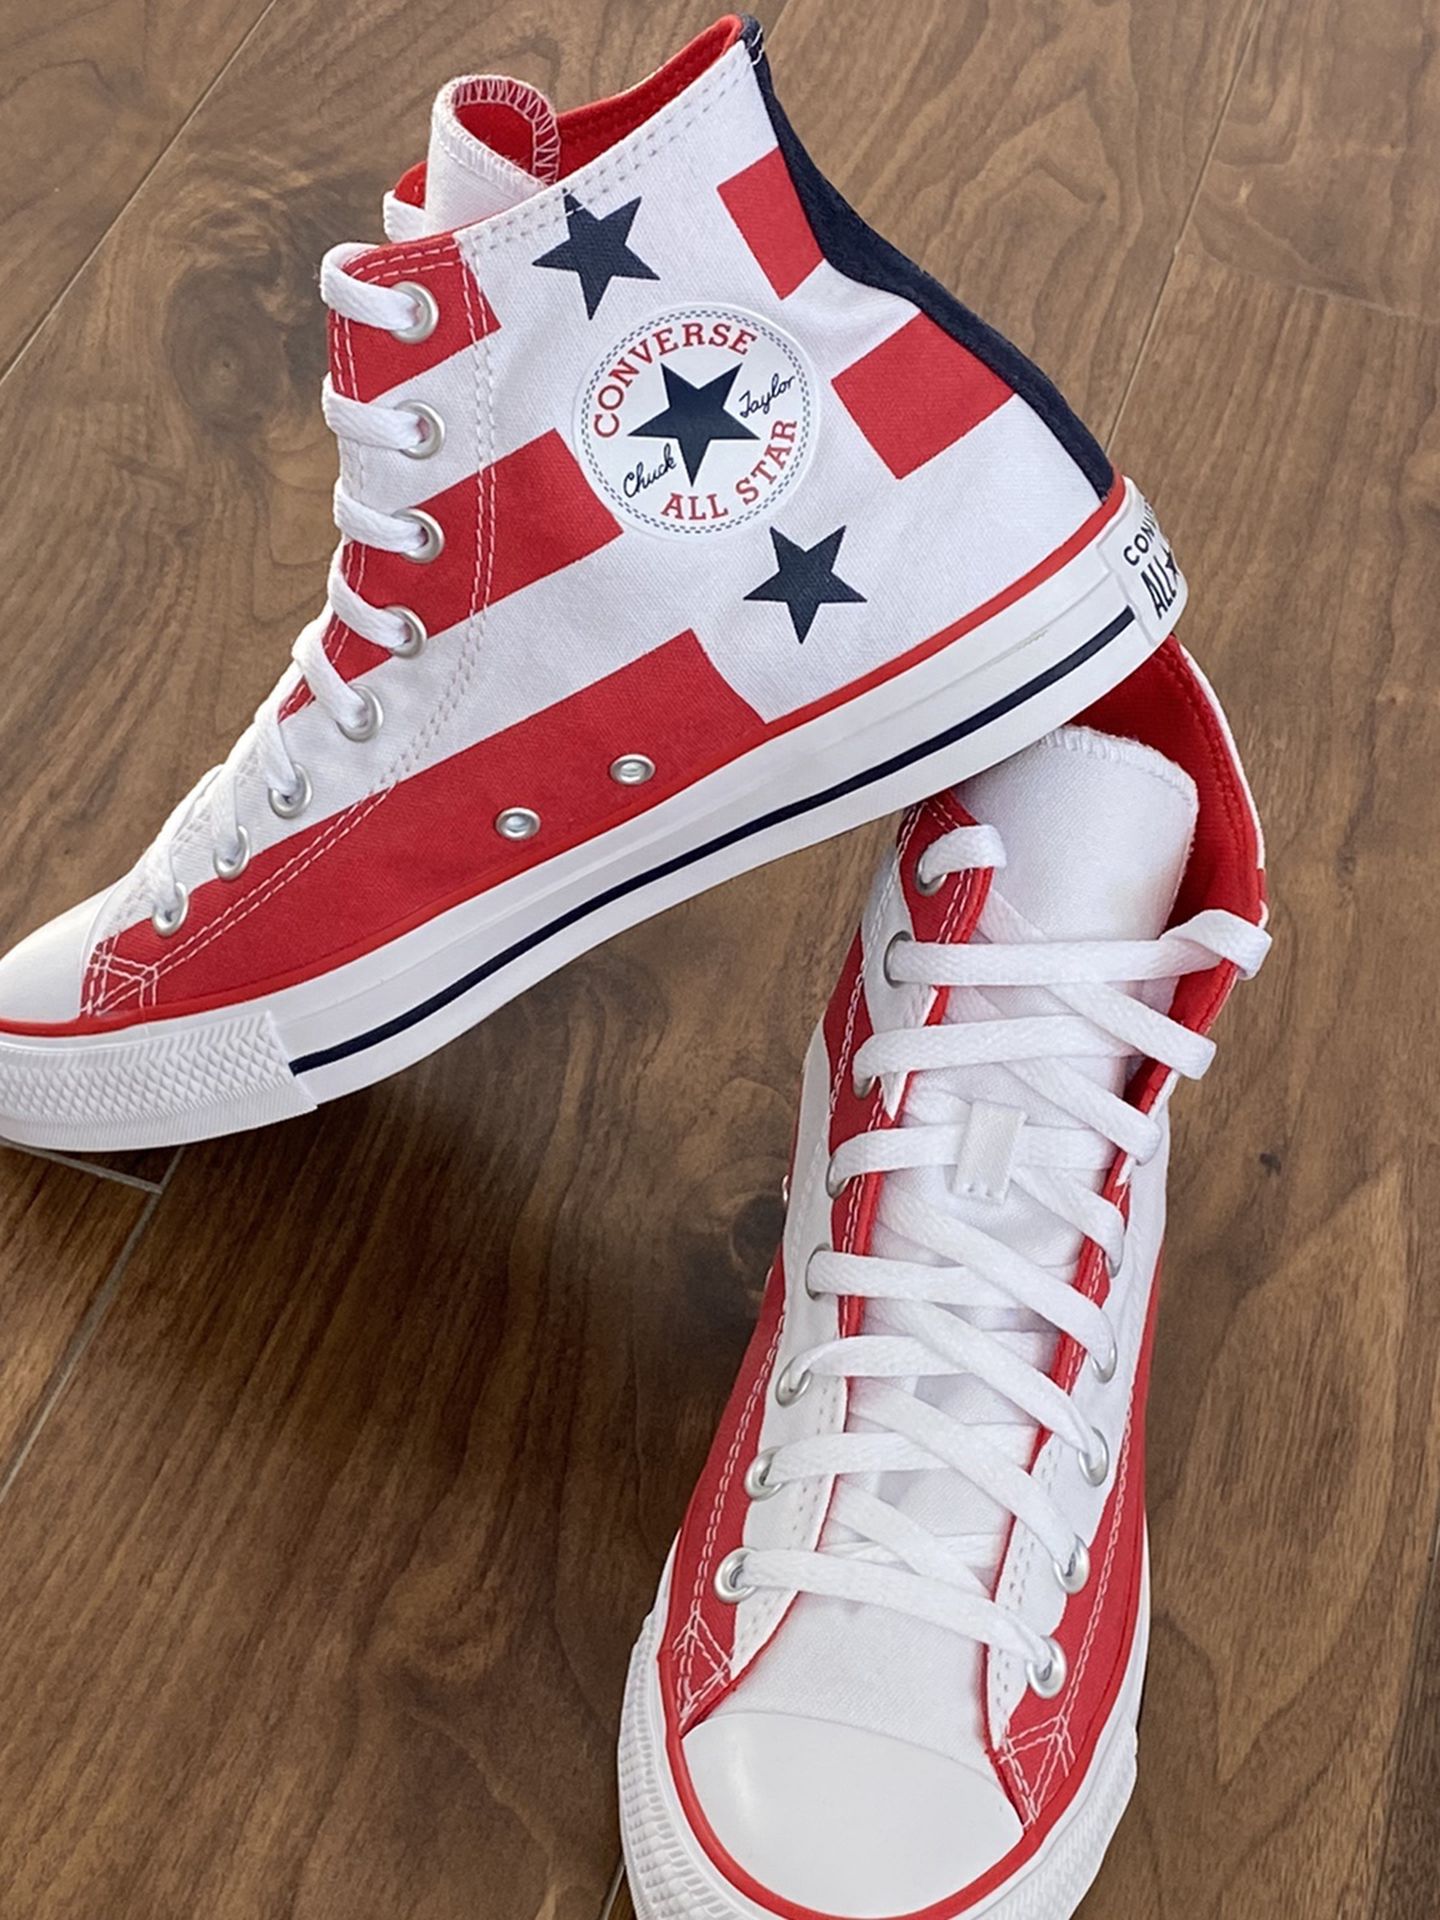 Converse Americana Flag Red White Blue High Hi Tops Stars Stripes Sneakers SZ 8 men’s & women’s 10